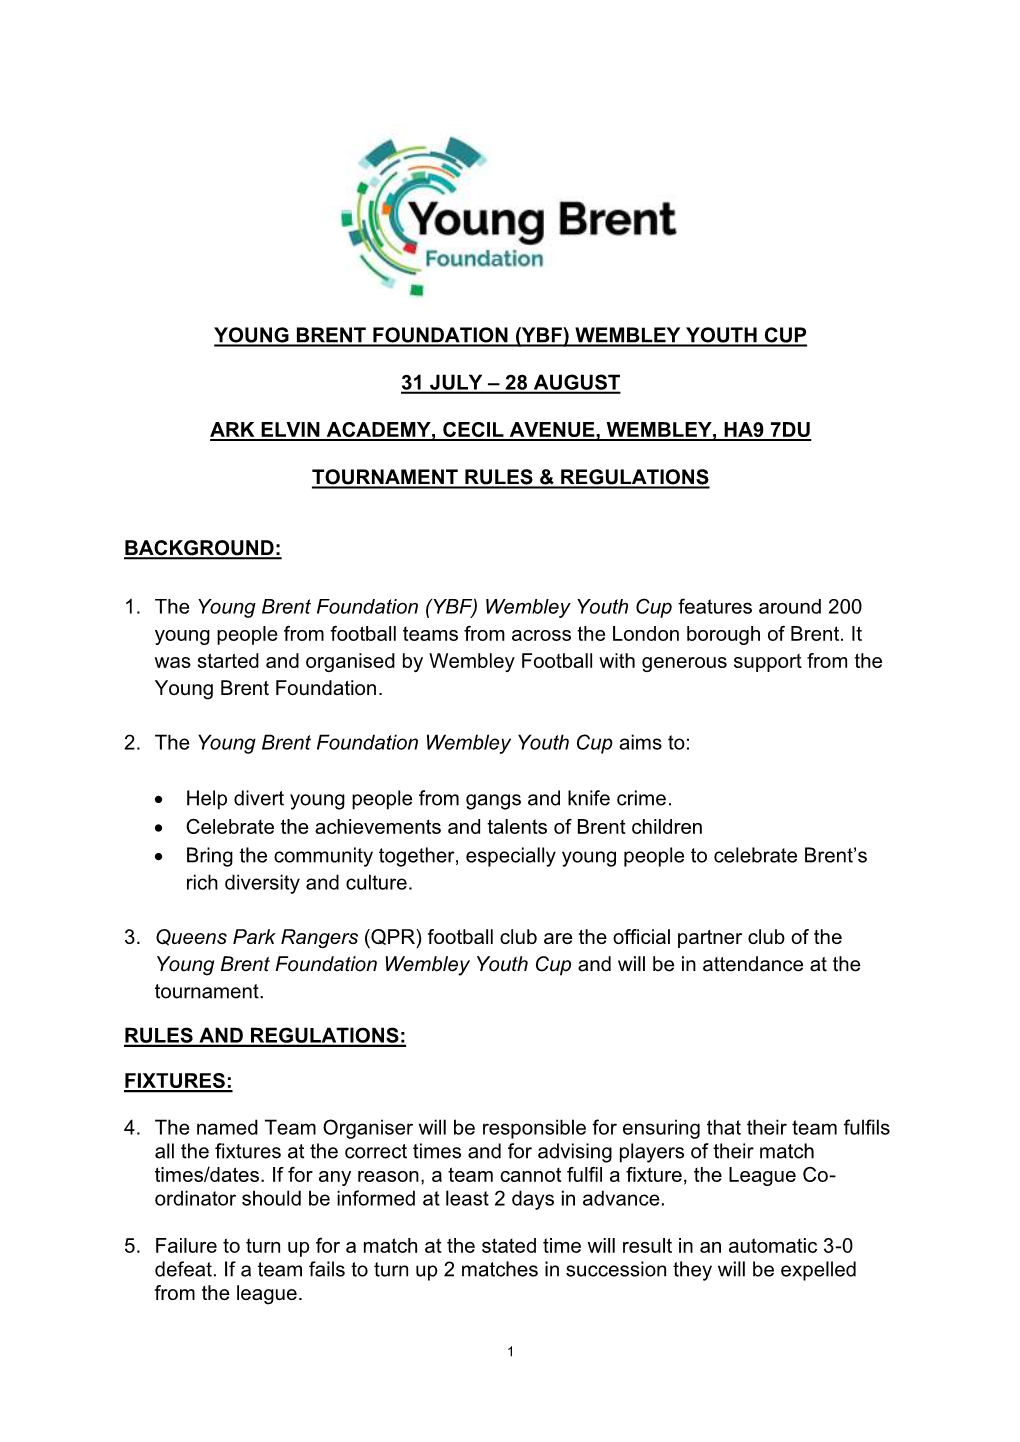 (Ybf) Wembley Youth Cup 31 July